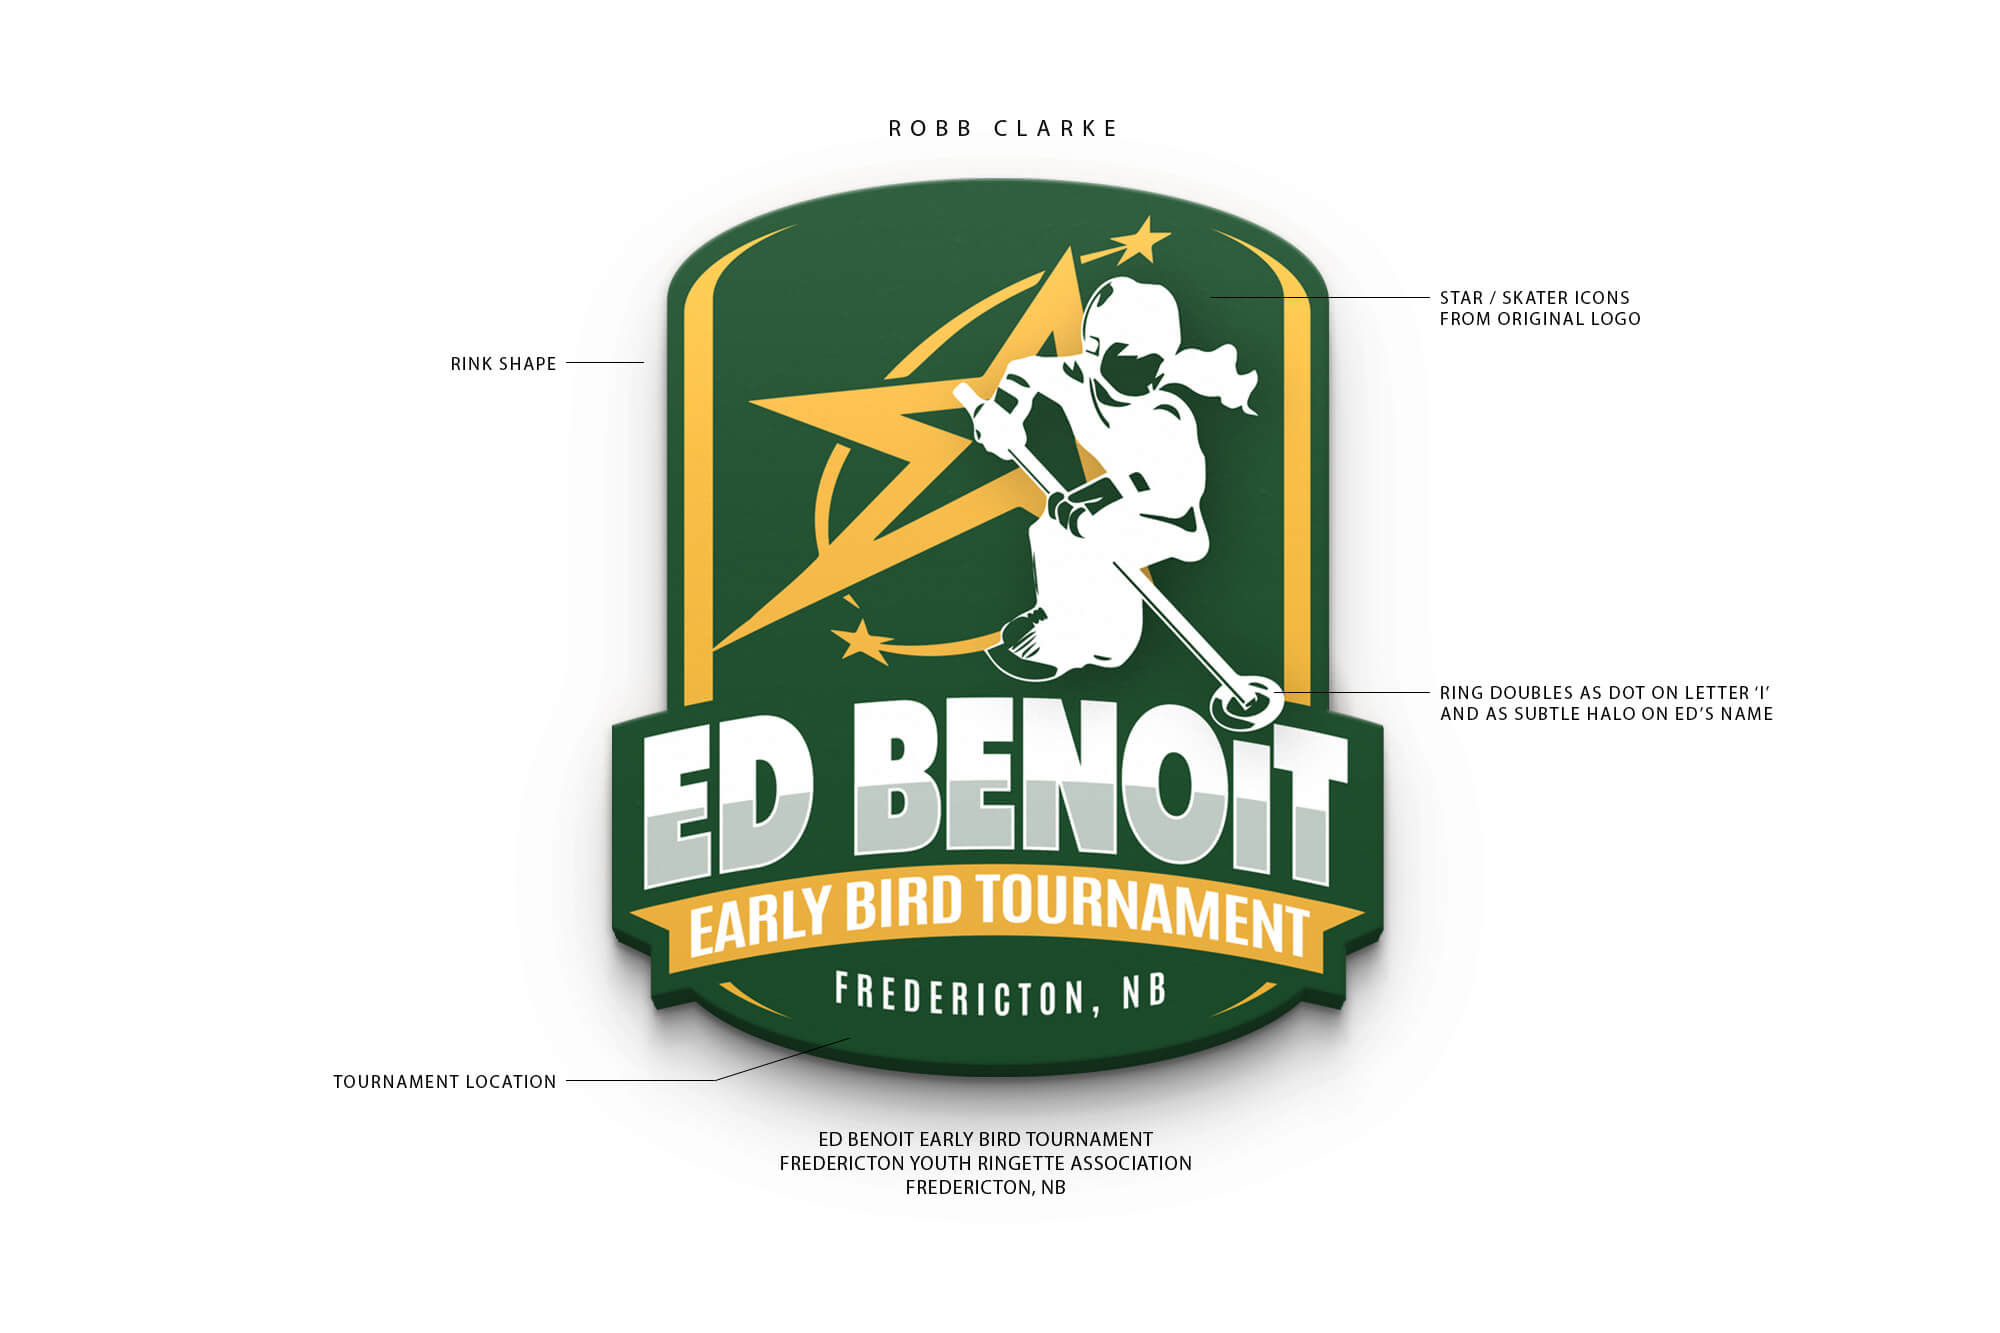 Ed Benoit Early Bird Tournament